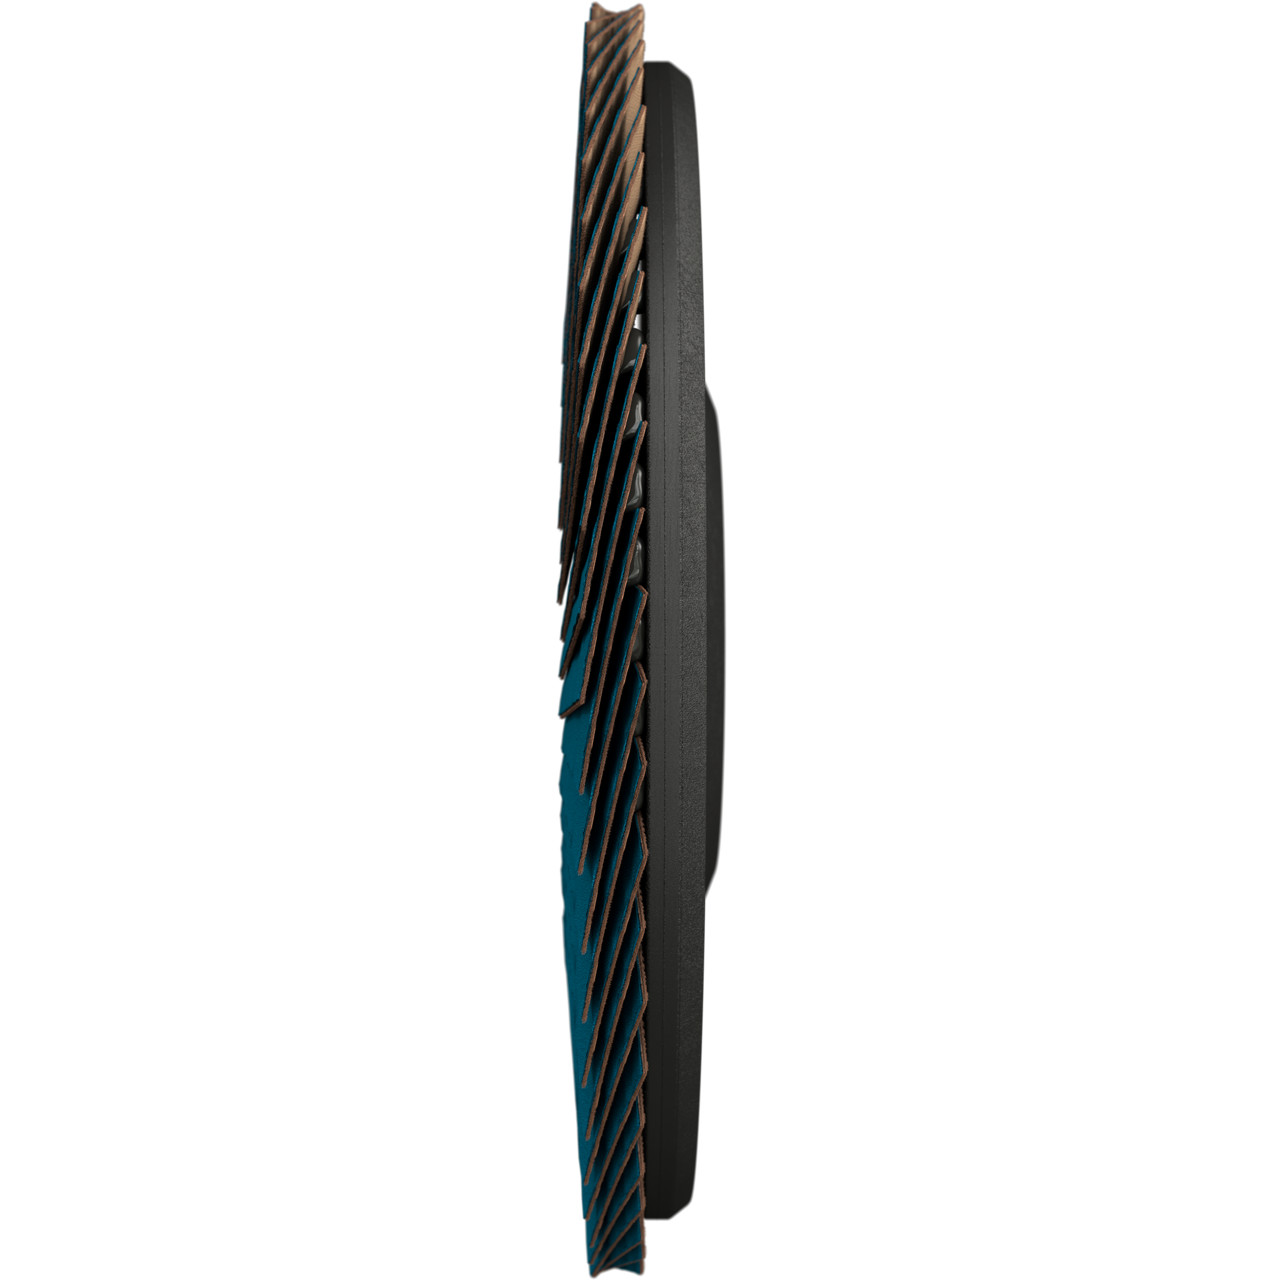 TYROLIT Fächerscheibe DxH 150x22,23 LONGLIFE für Stahl, P60, Form: 28N - gerade Ausführung (Kunststoffträgerkörper), Art. 34063399